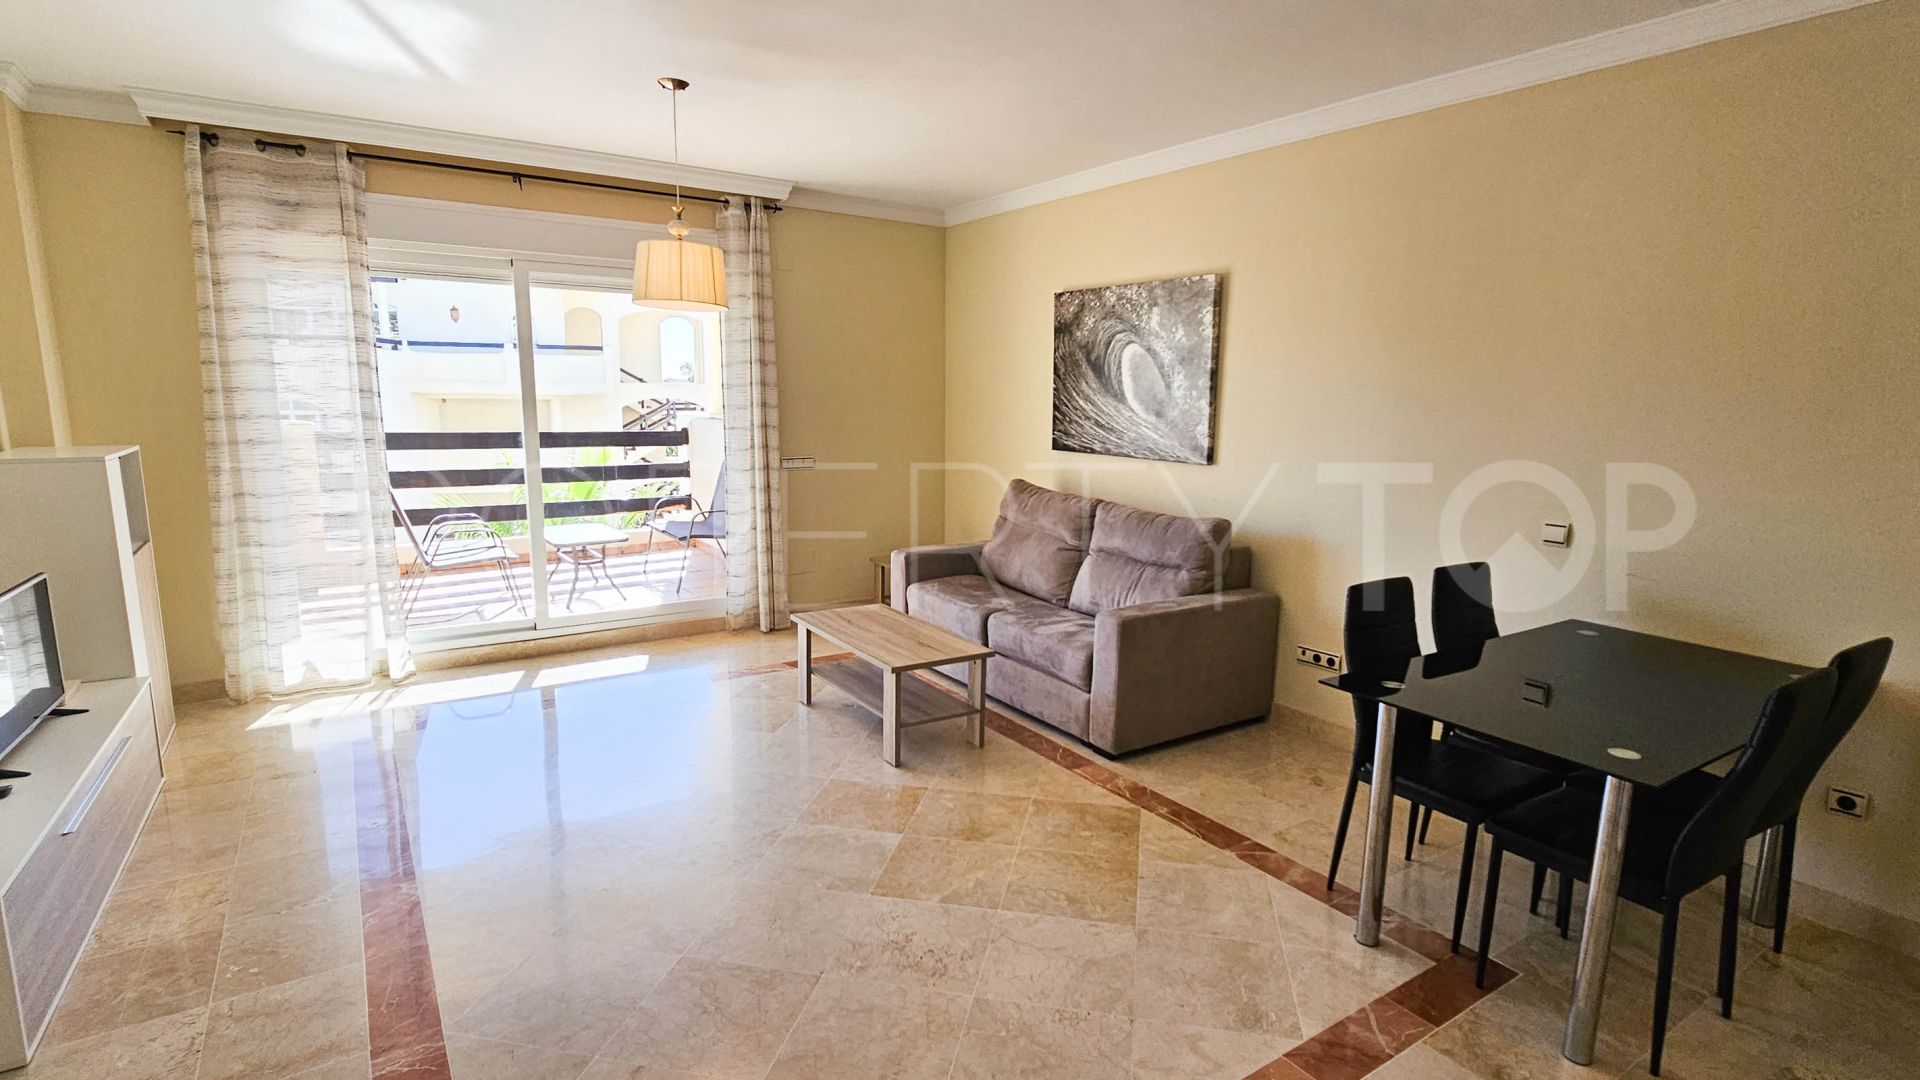 For sale apartment in El Paraiso